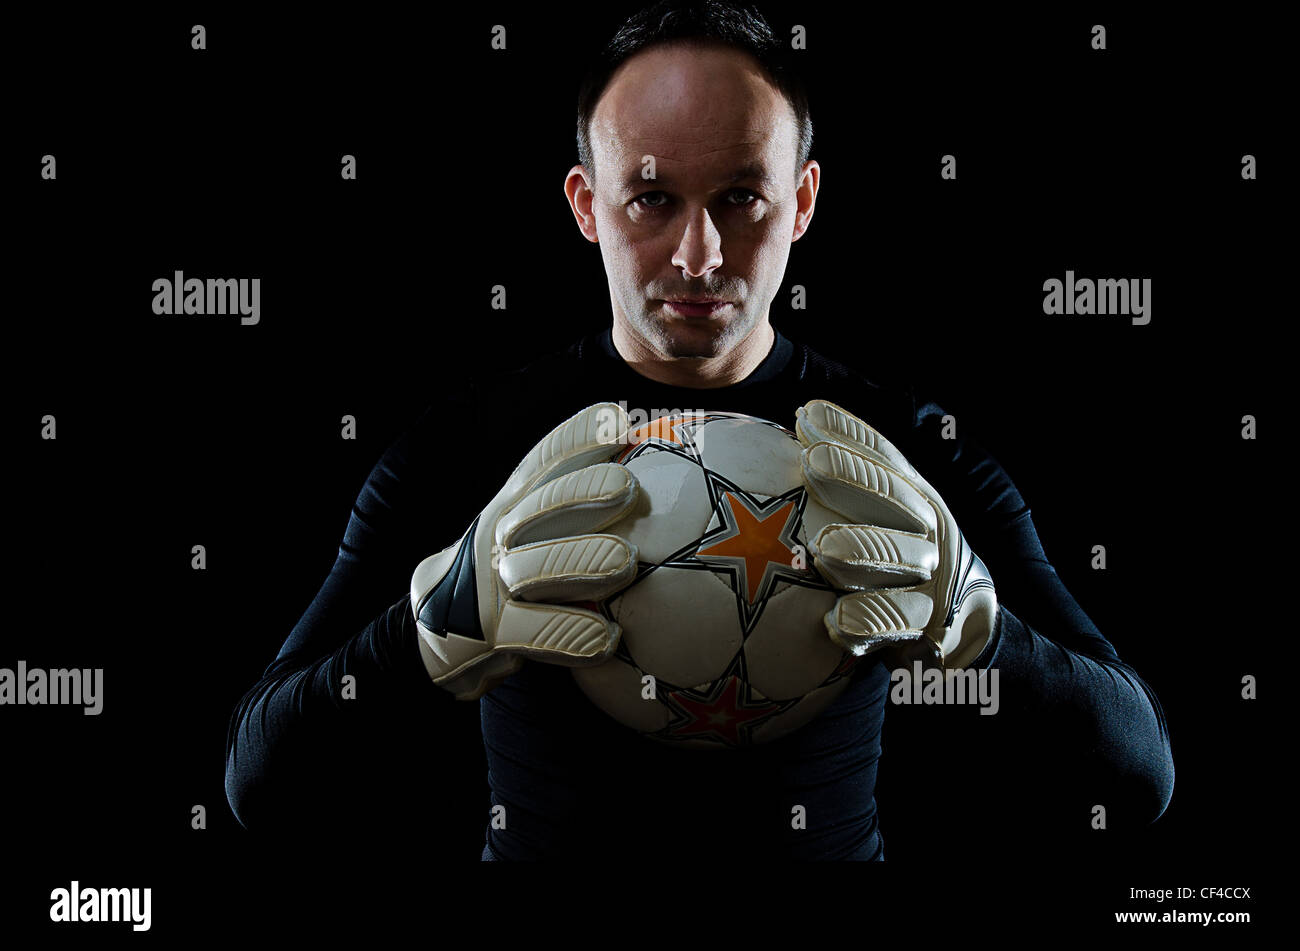 Portrait of football goalkeeper on black background. Man is wearing goalie gloves and goalkeeper's blouse. Studio shot Stock Photo